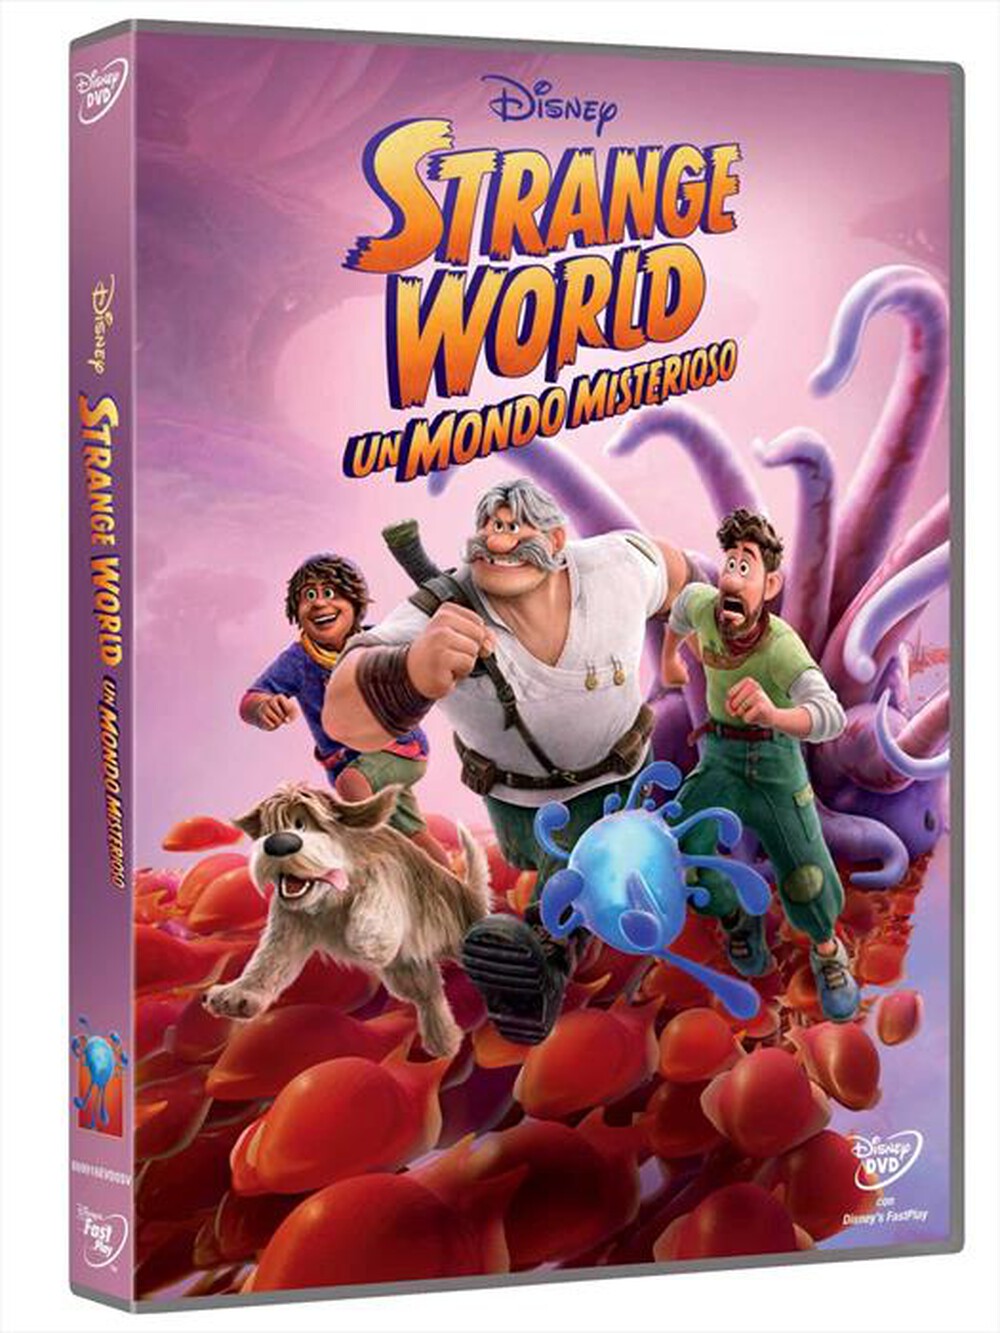 "WALT DISNEY - Strange World - Un Mondo Misterioso"